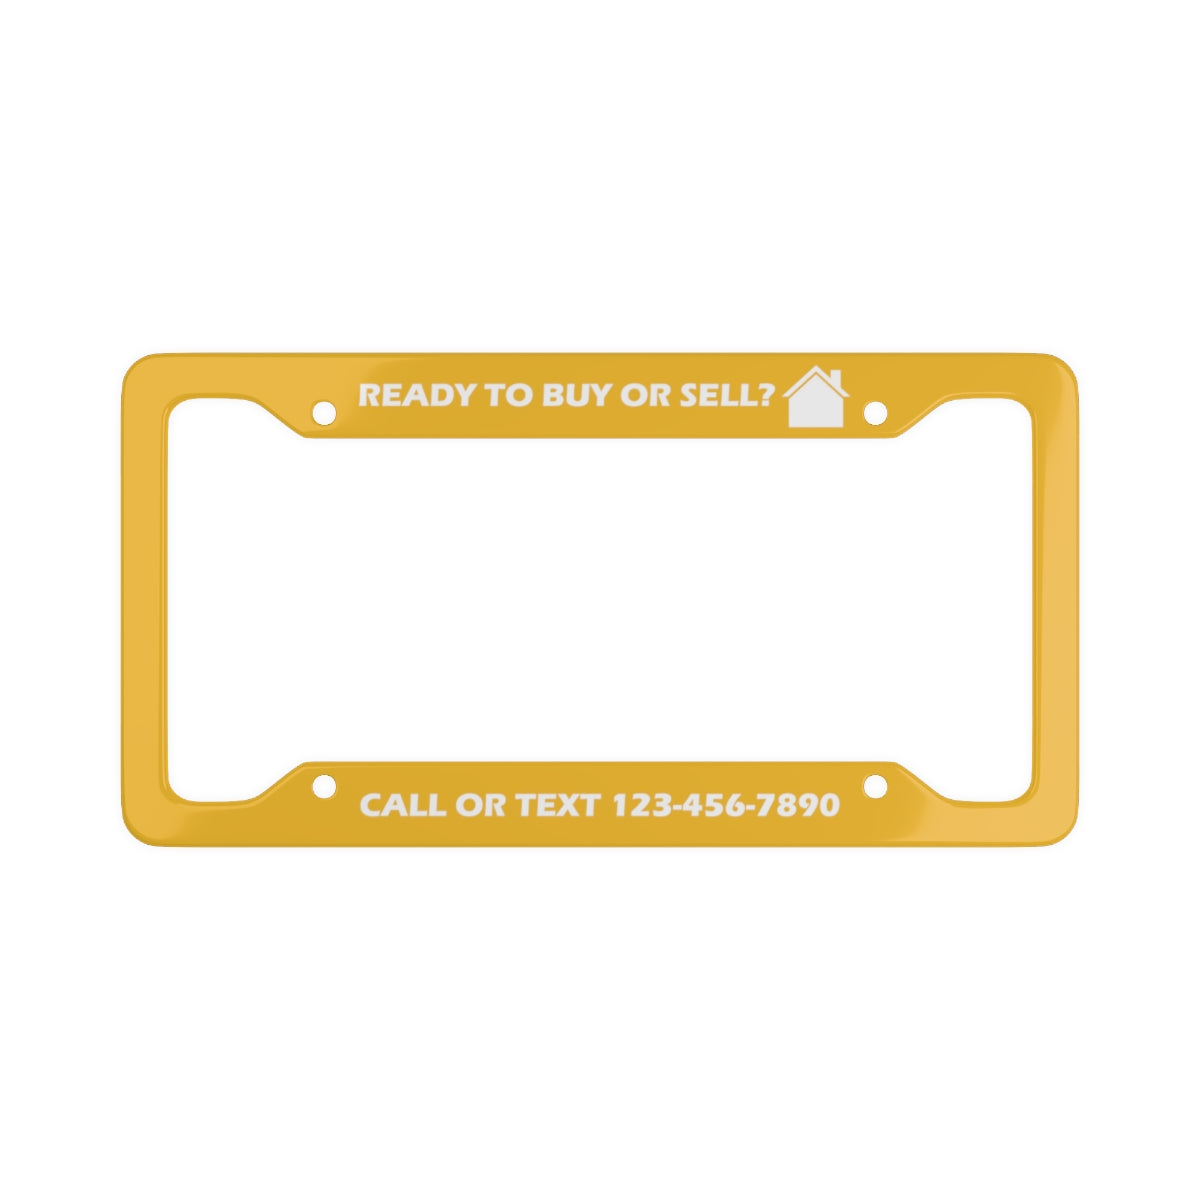 Custom License Plate Frame - Buy/Sell - Yellow